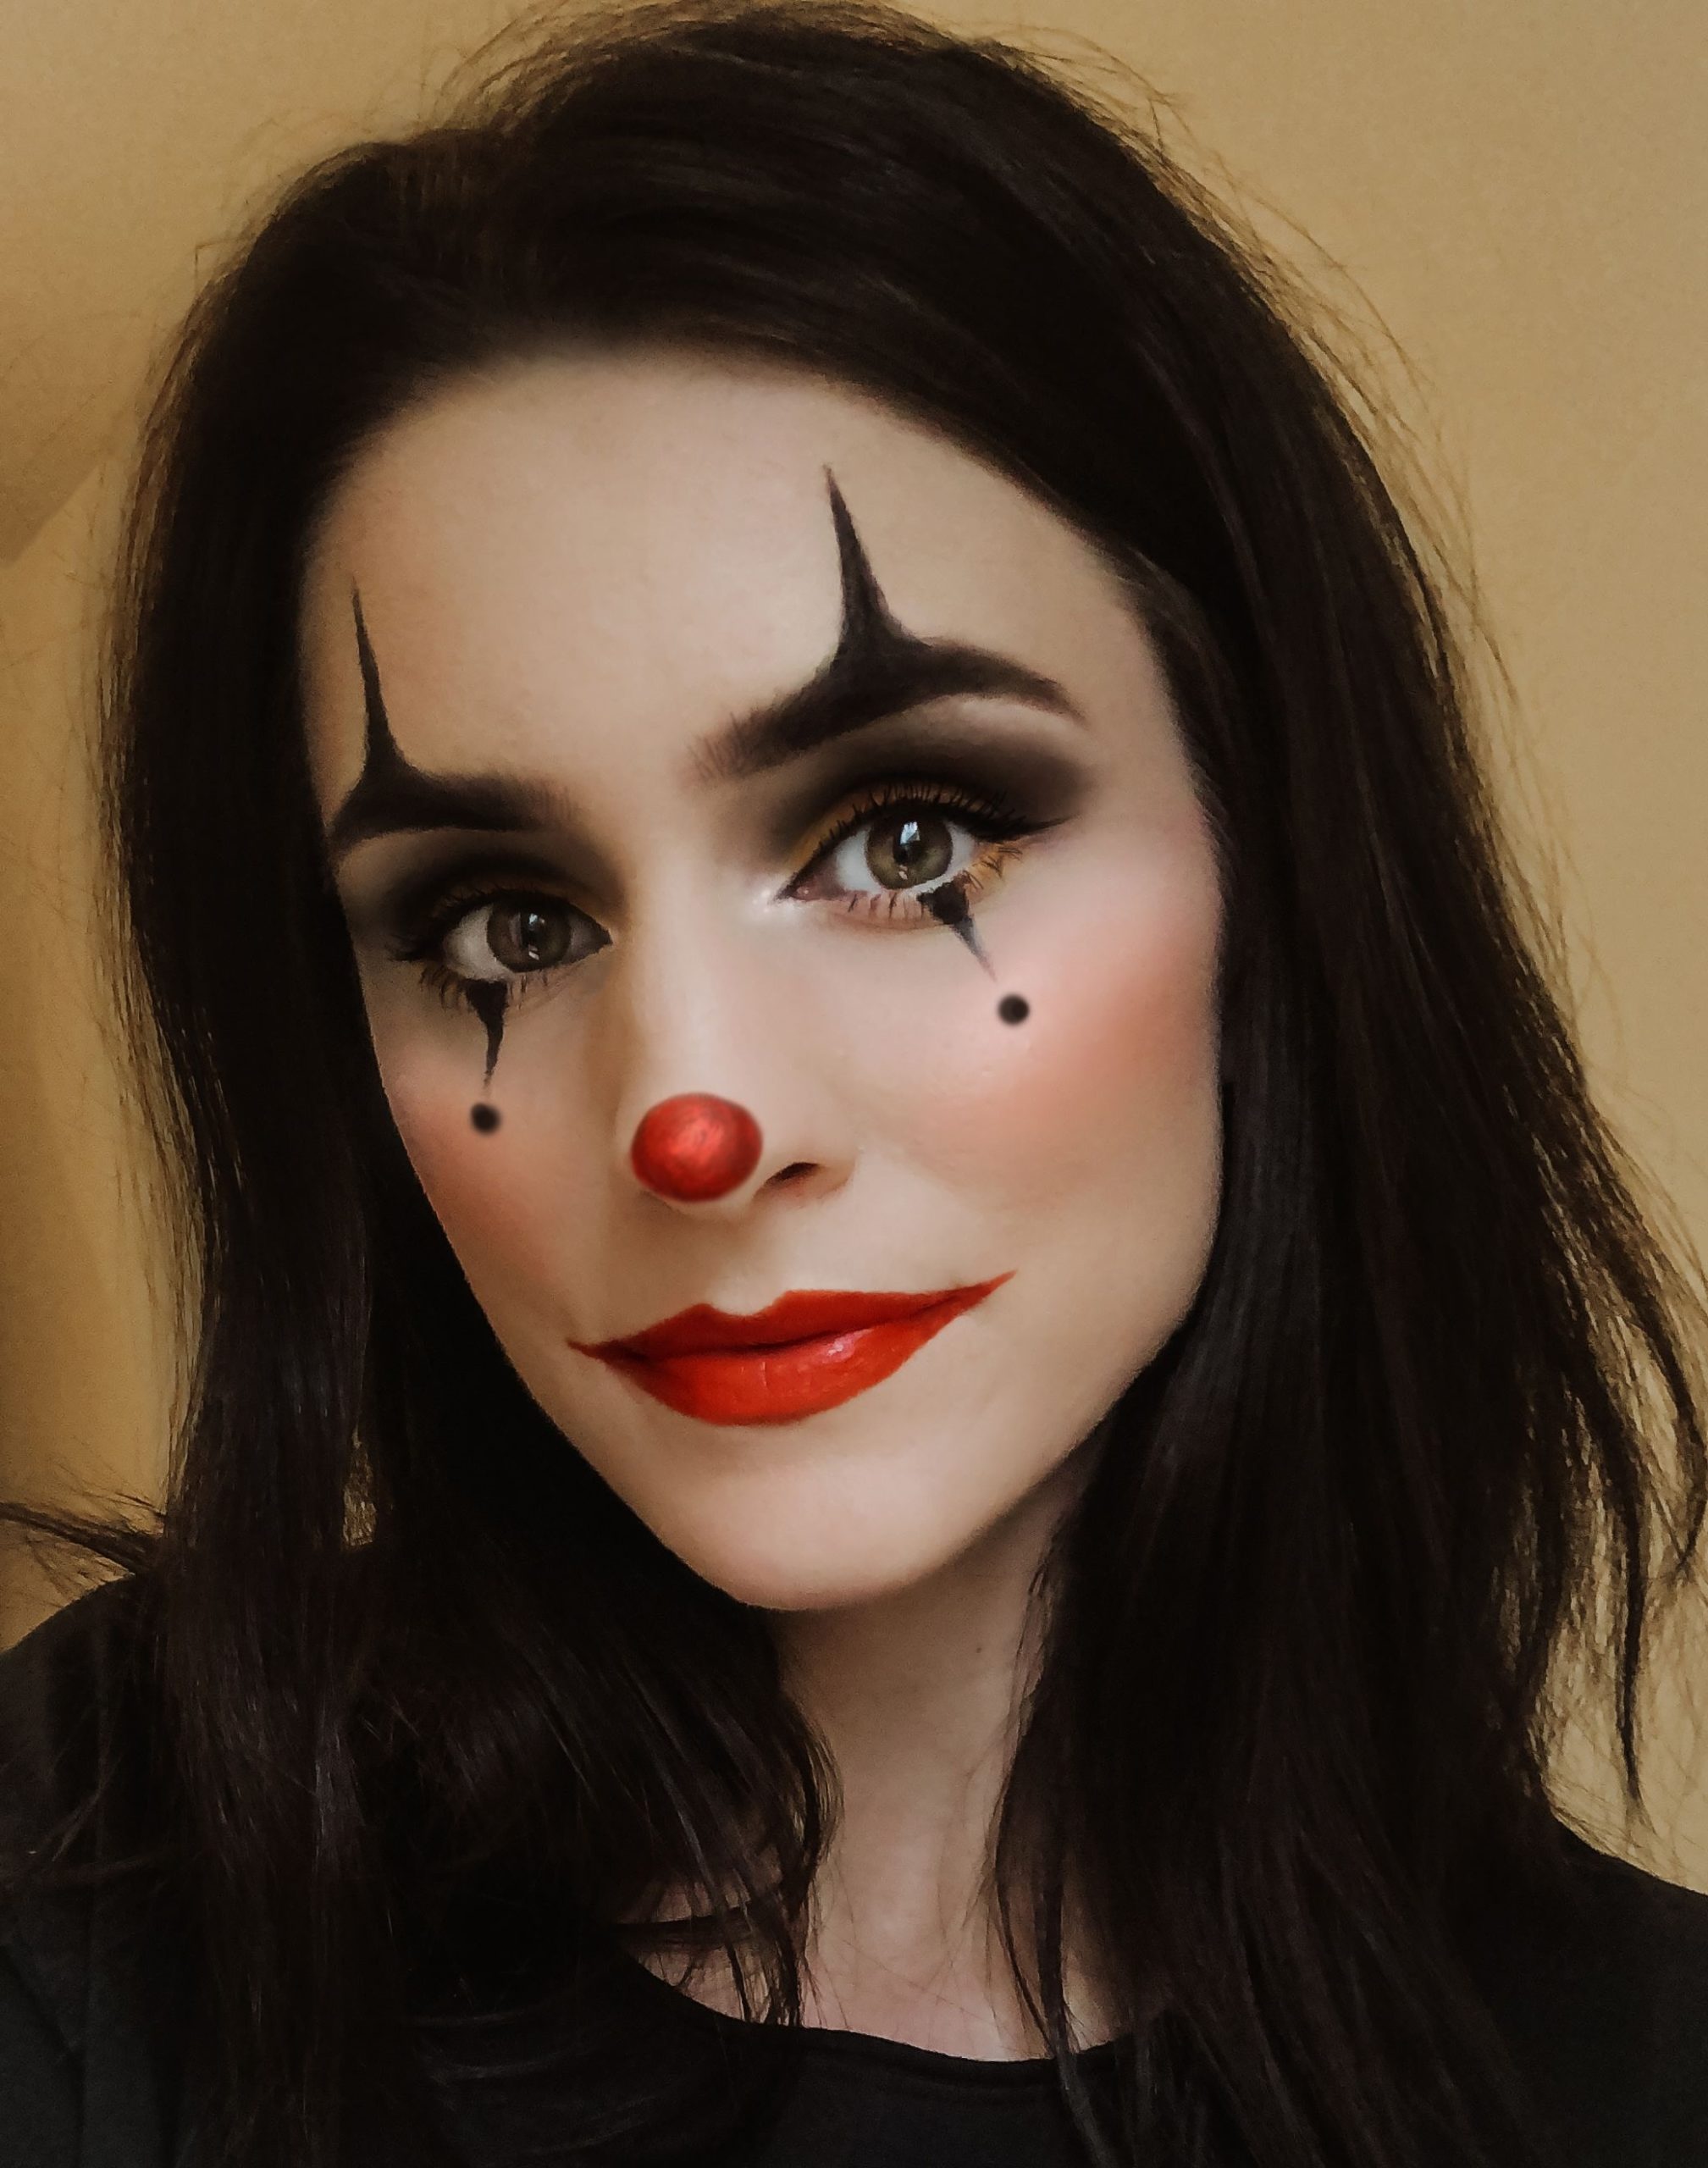 Tuto maquillage clown d'Halloween (+55 photos inspirantes) - Halloween